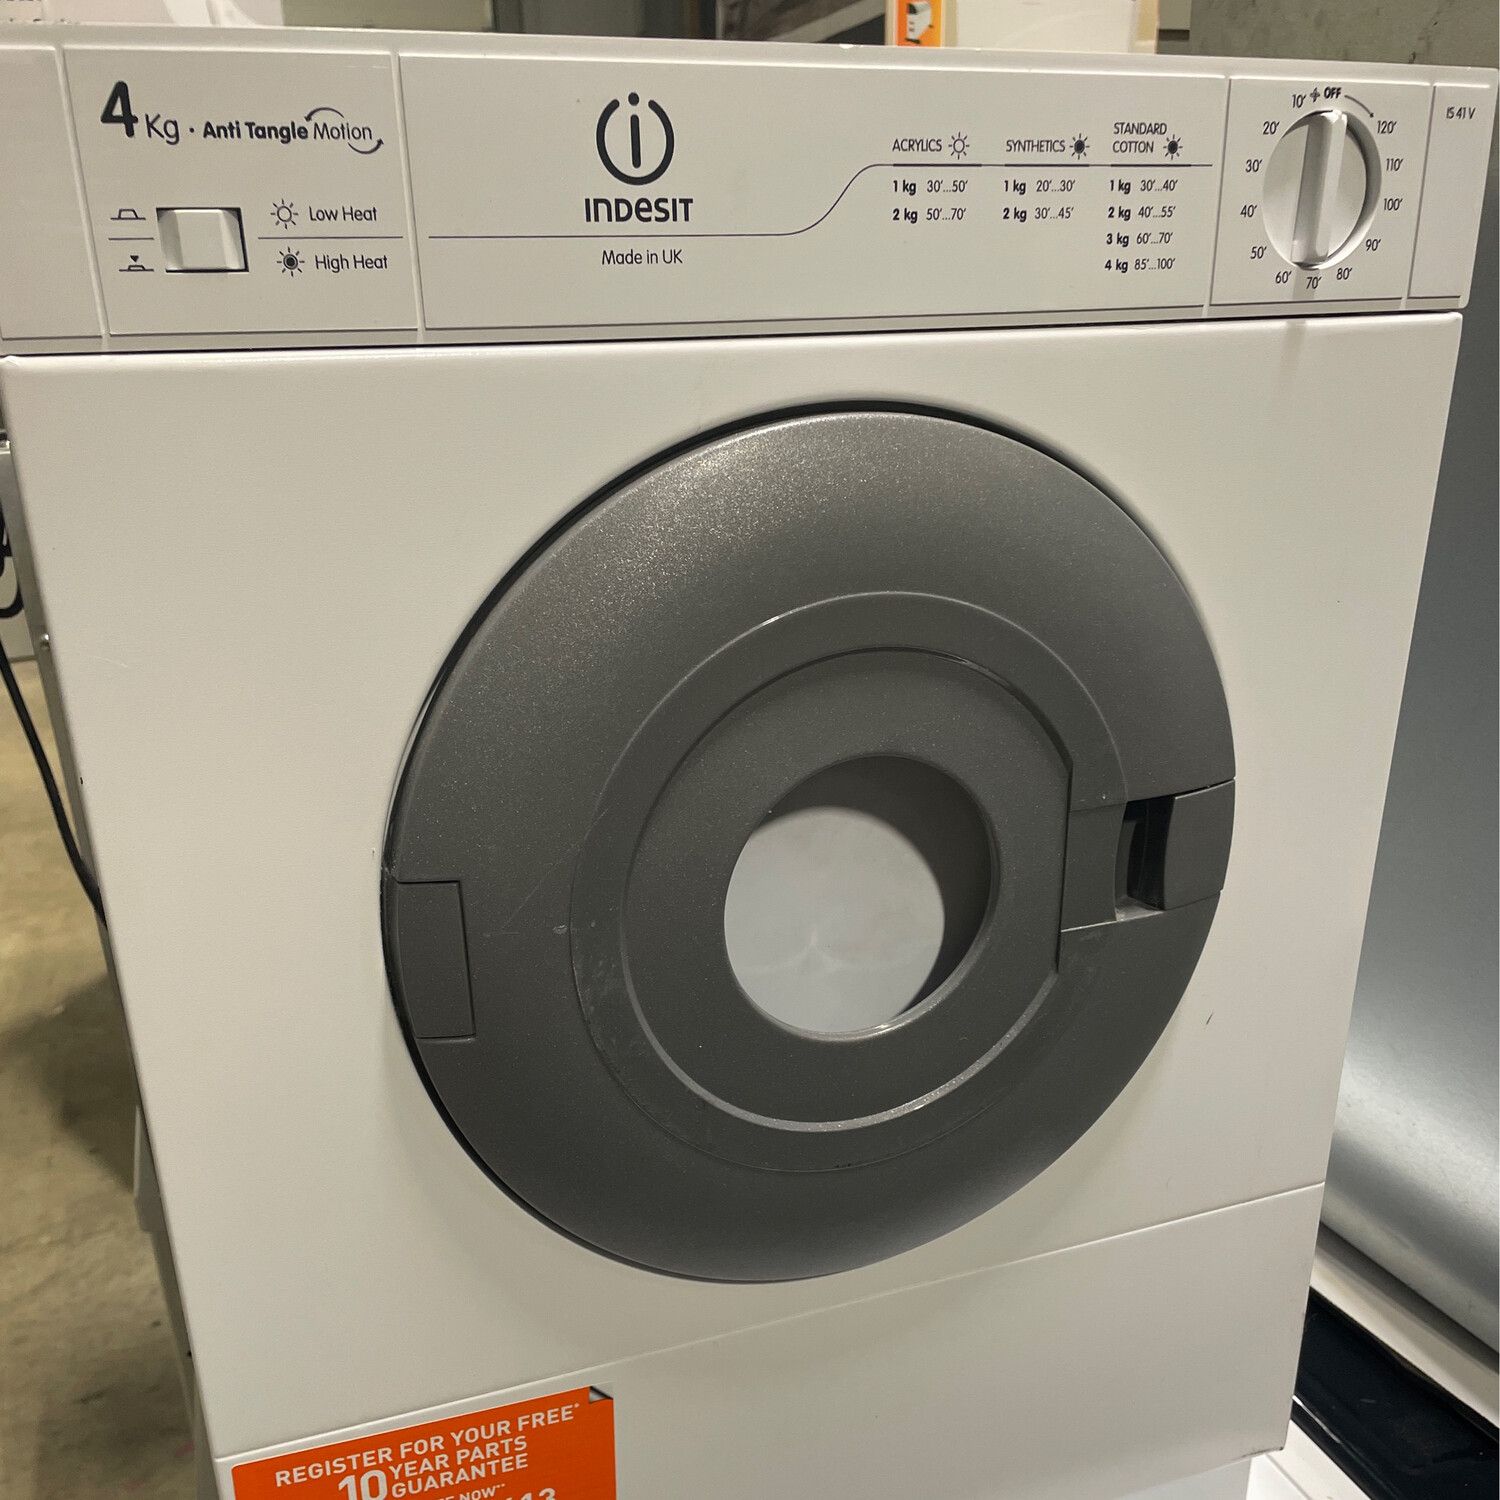 Indesit 4KG Dryer White Refurbished H67cm
W49cm
D48cm 6 Months Guarantee